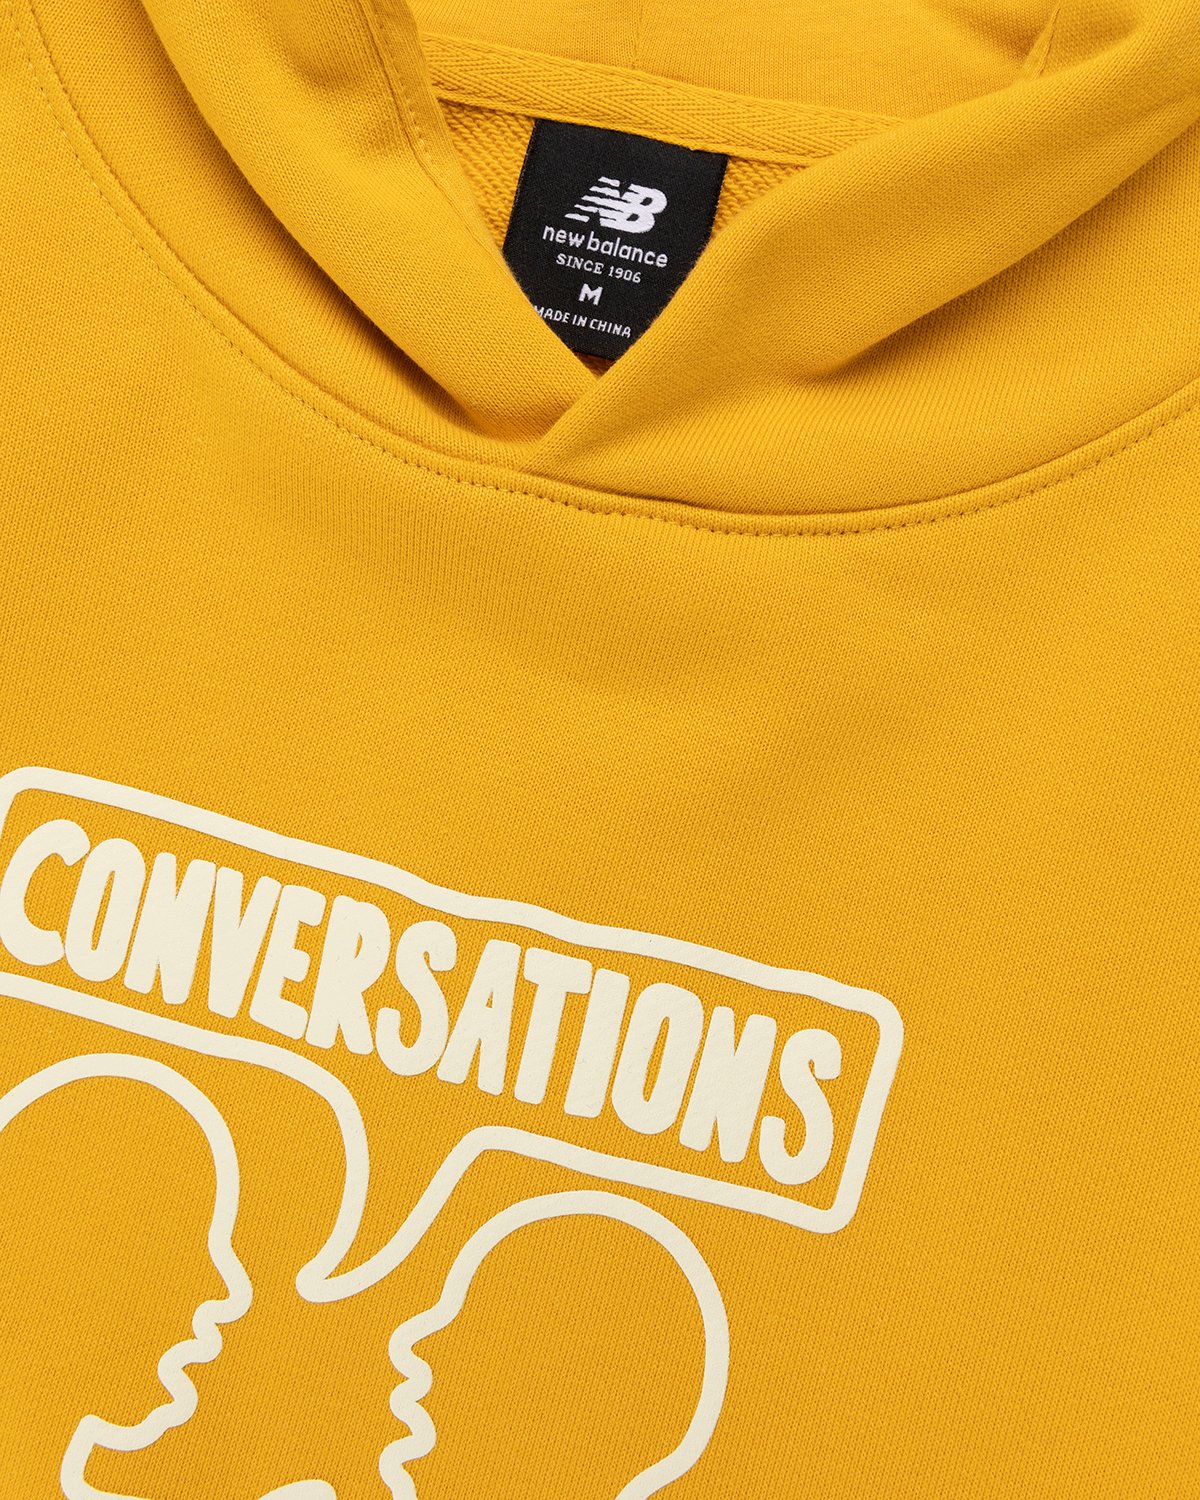 New Balance - Conversations Amongst Us Hoodie Aspen Yellow - Clothing - Yellow - Image 4